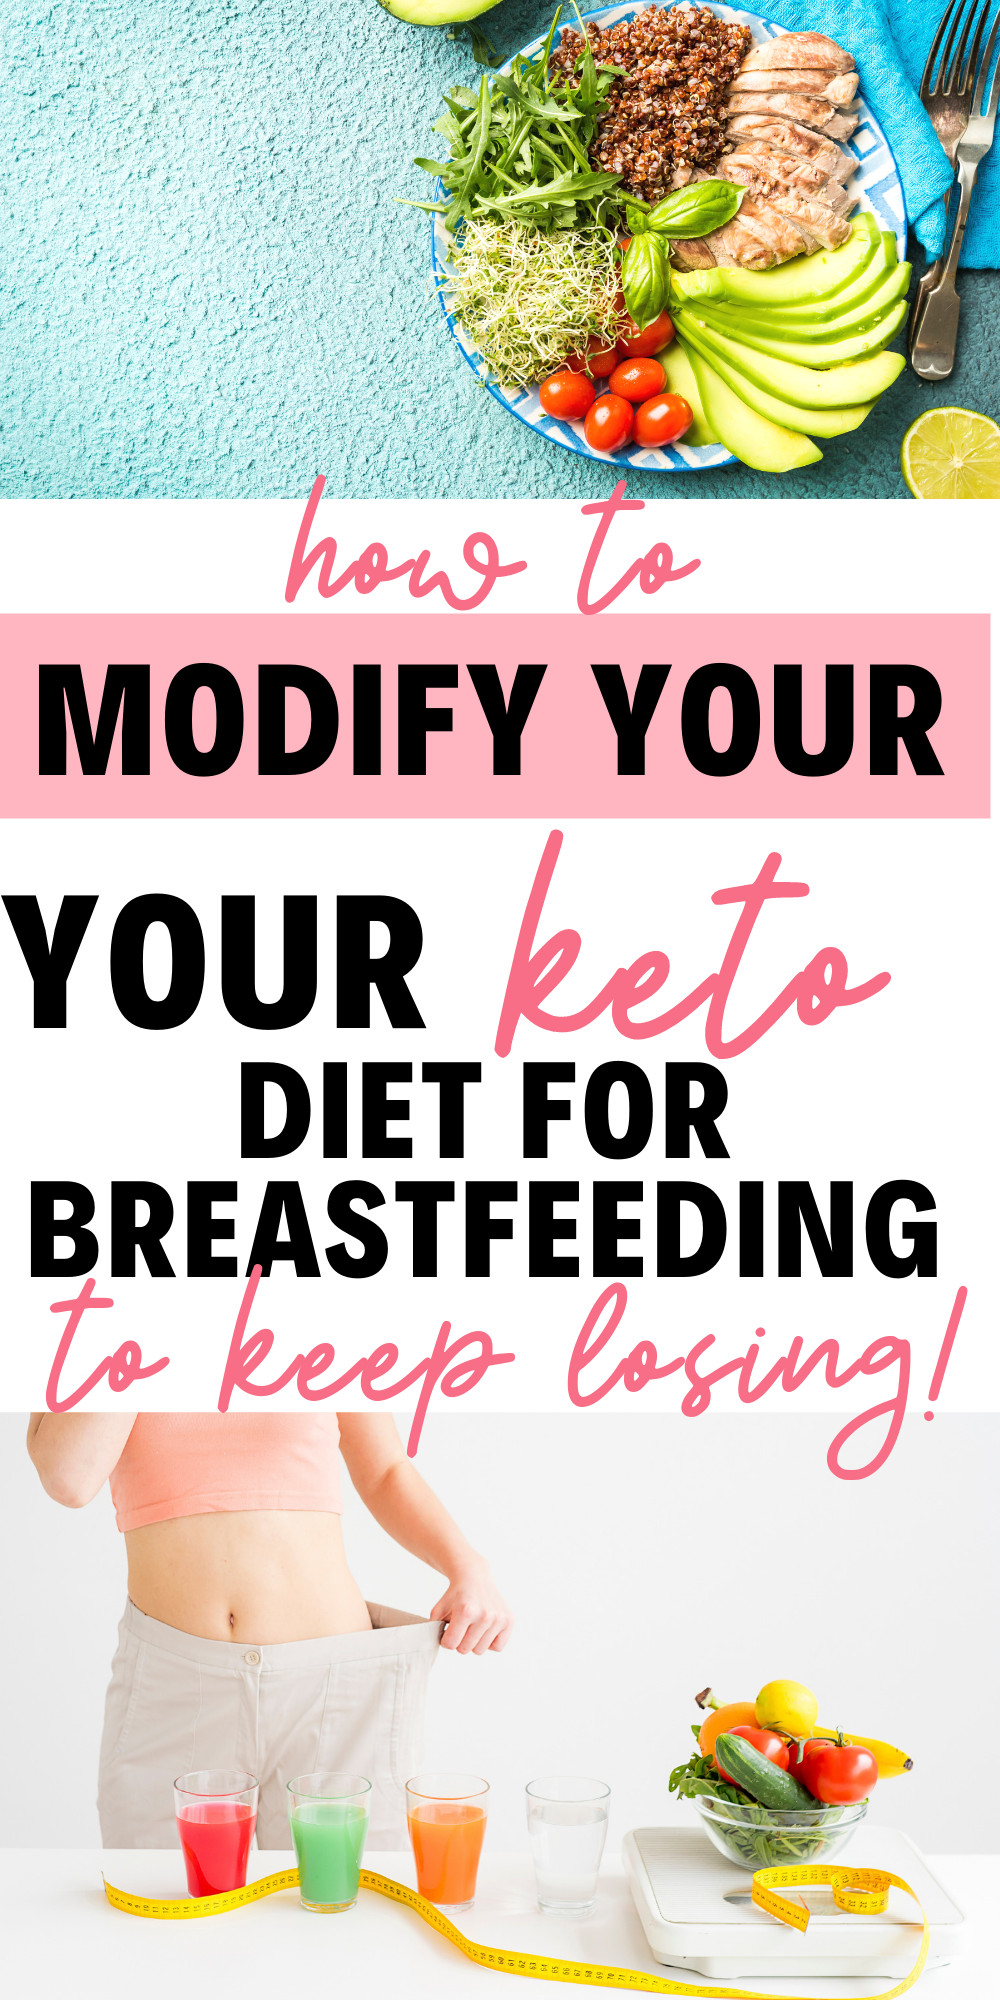 Keto Diet Breastfeeding
 How To Modify Your Keto Diet For Breastfeeding To Keep